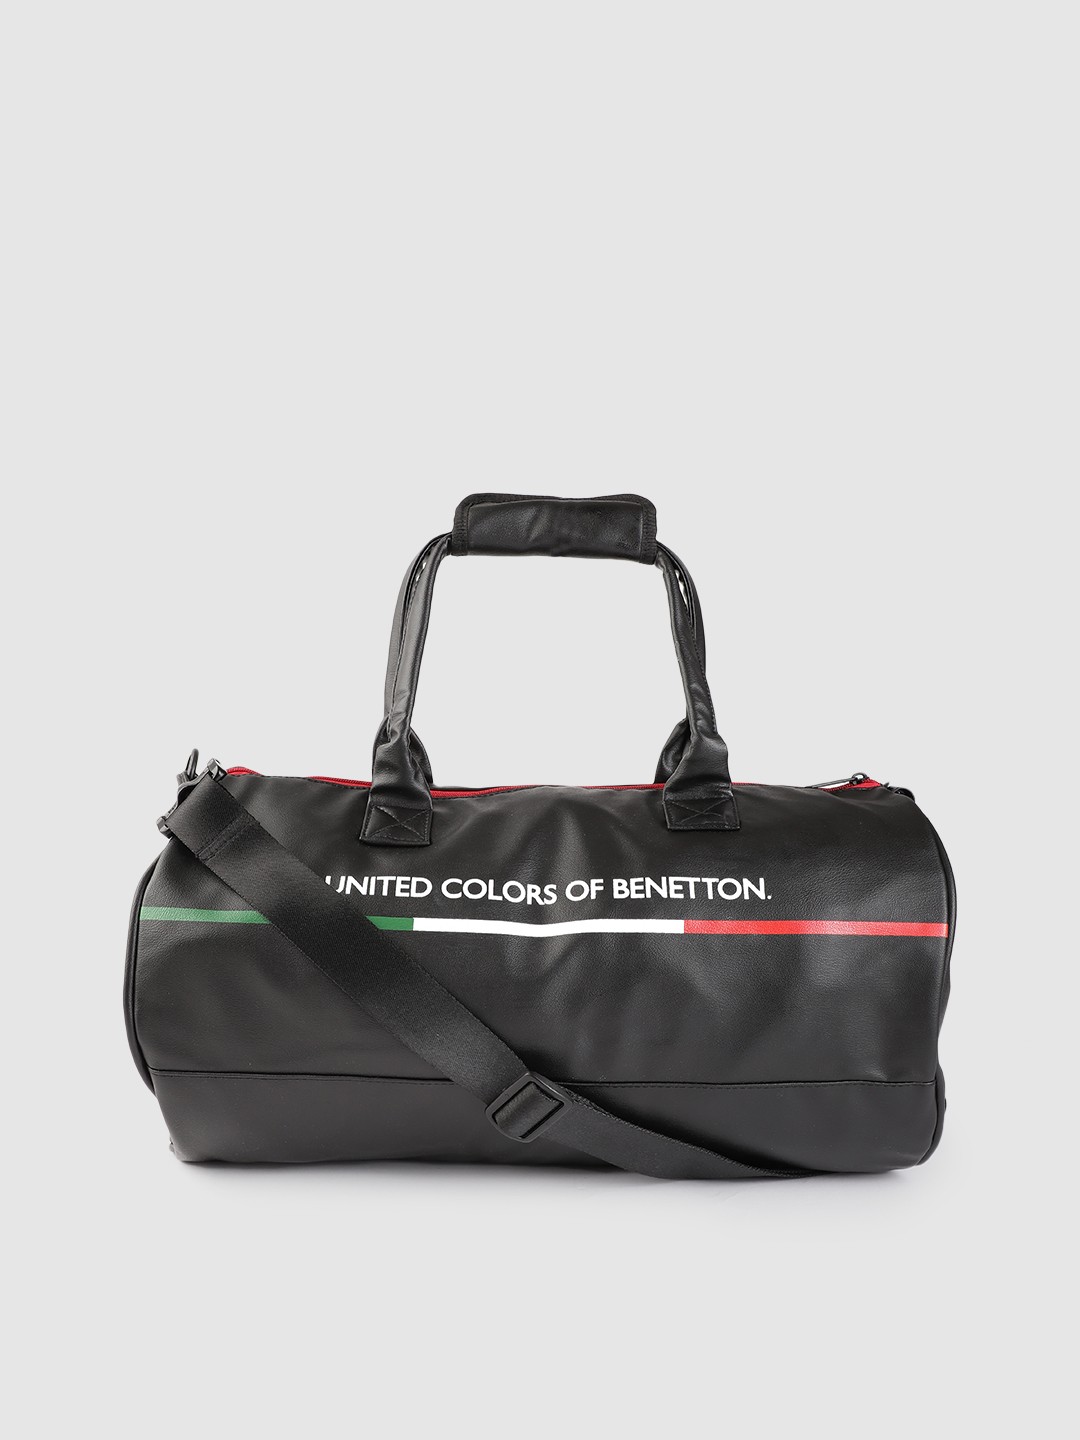 Accessories Duffel Bag | United Colors of Benetton Unisex Black Brand Name Print Gym Duffel Bag - IU62638